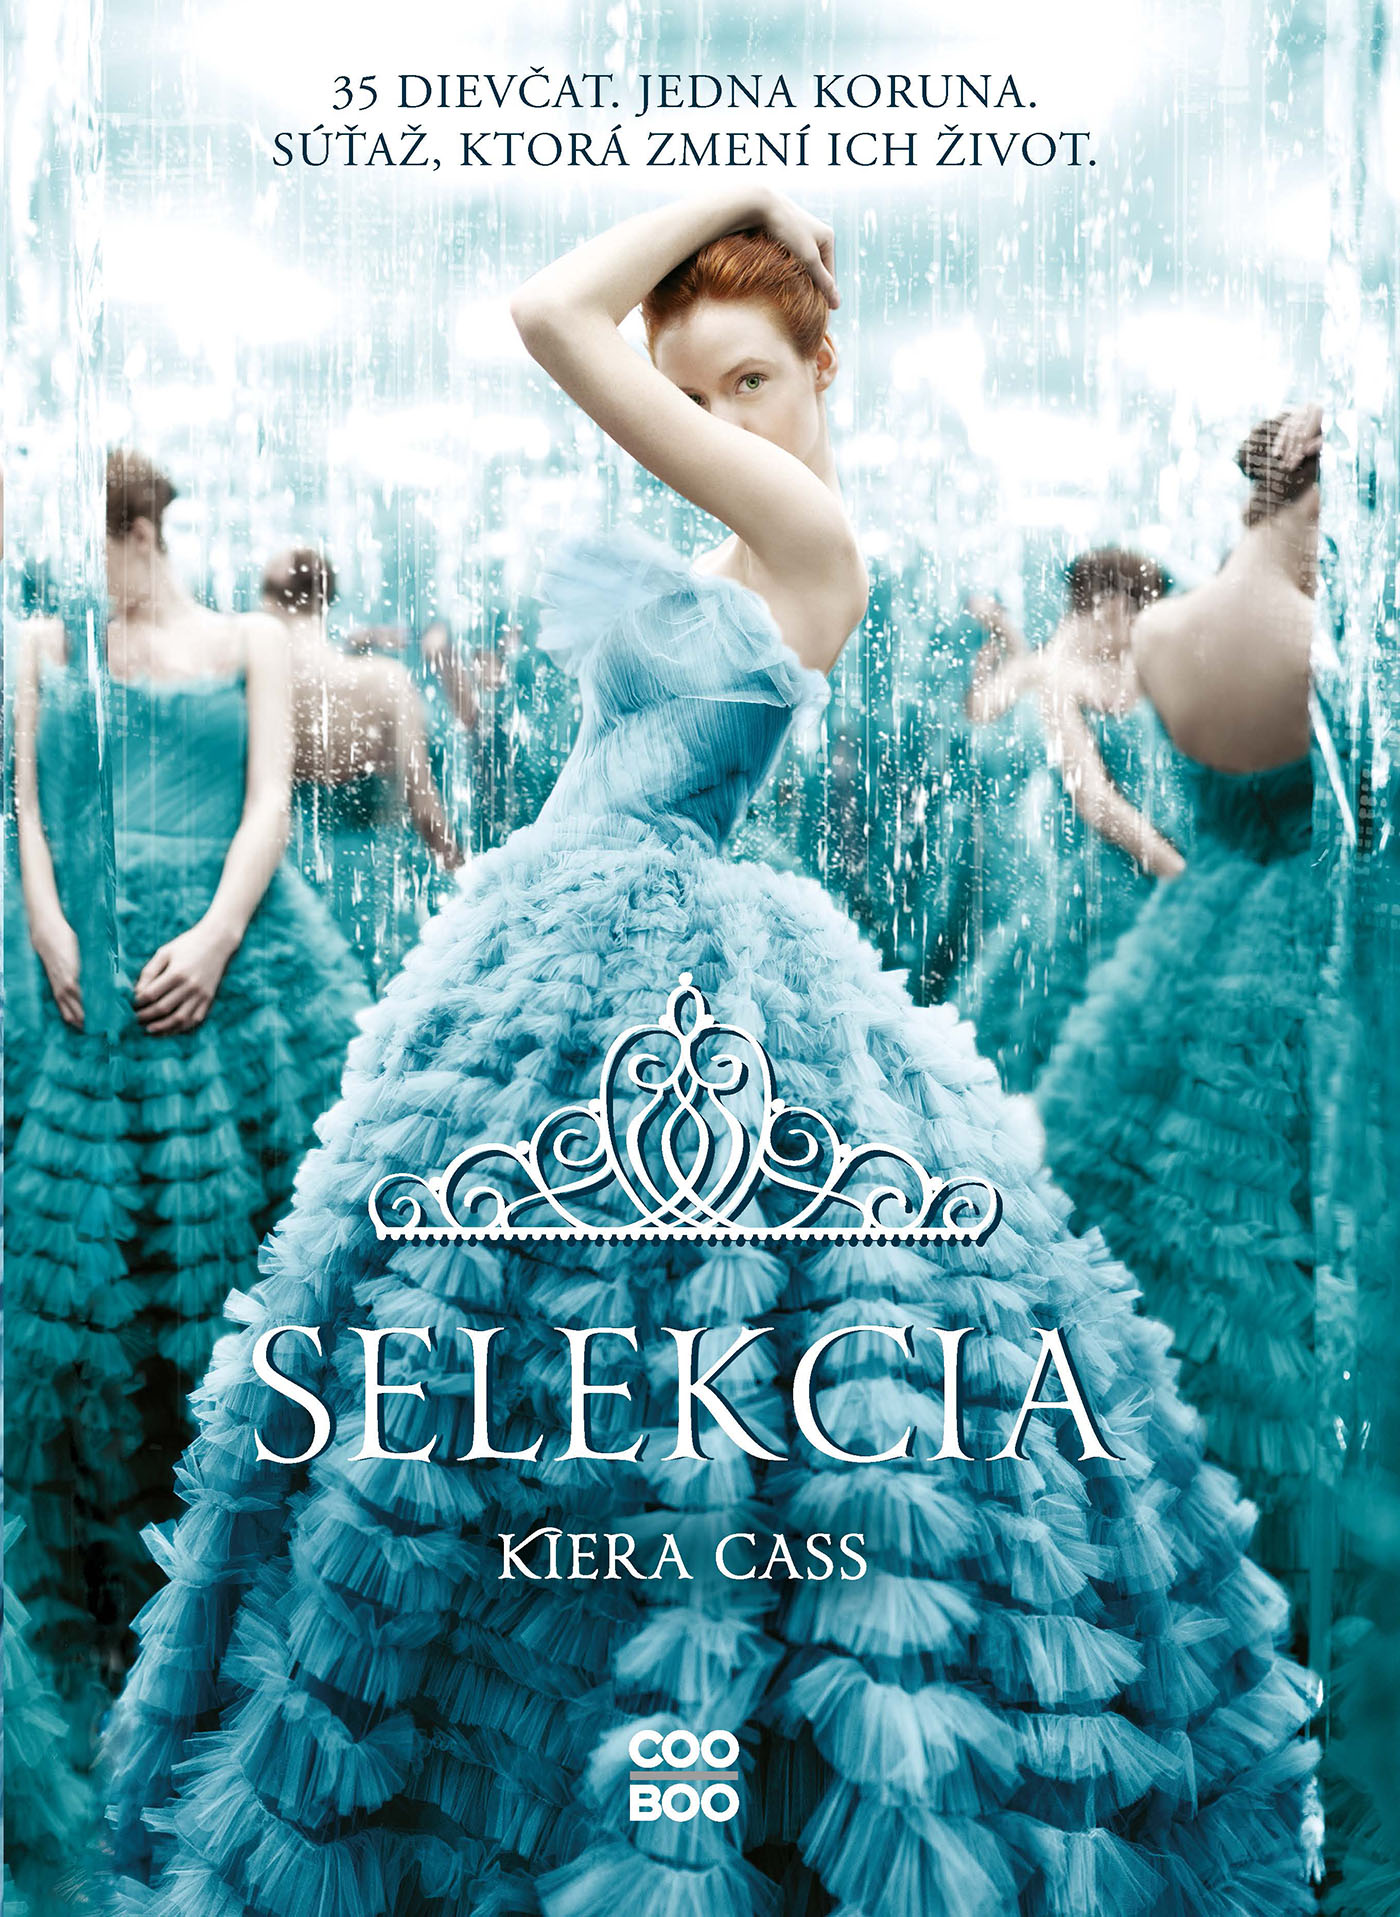 E-kniha Selekcia - Kiera Cassová